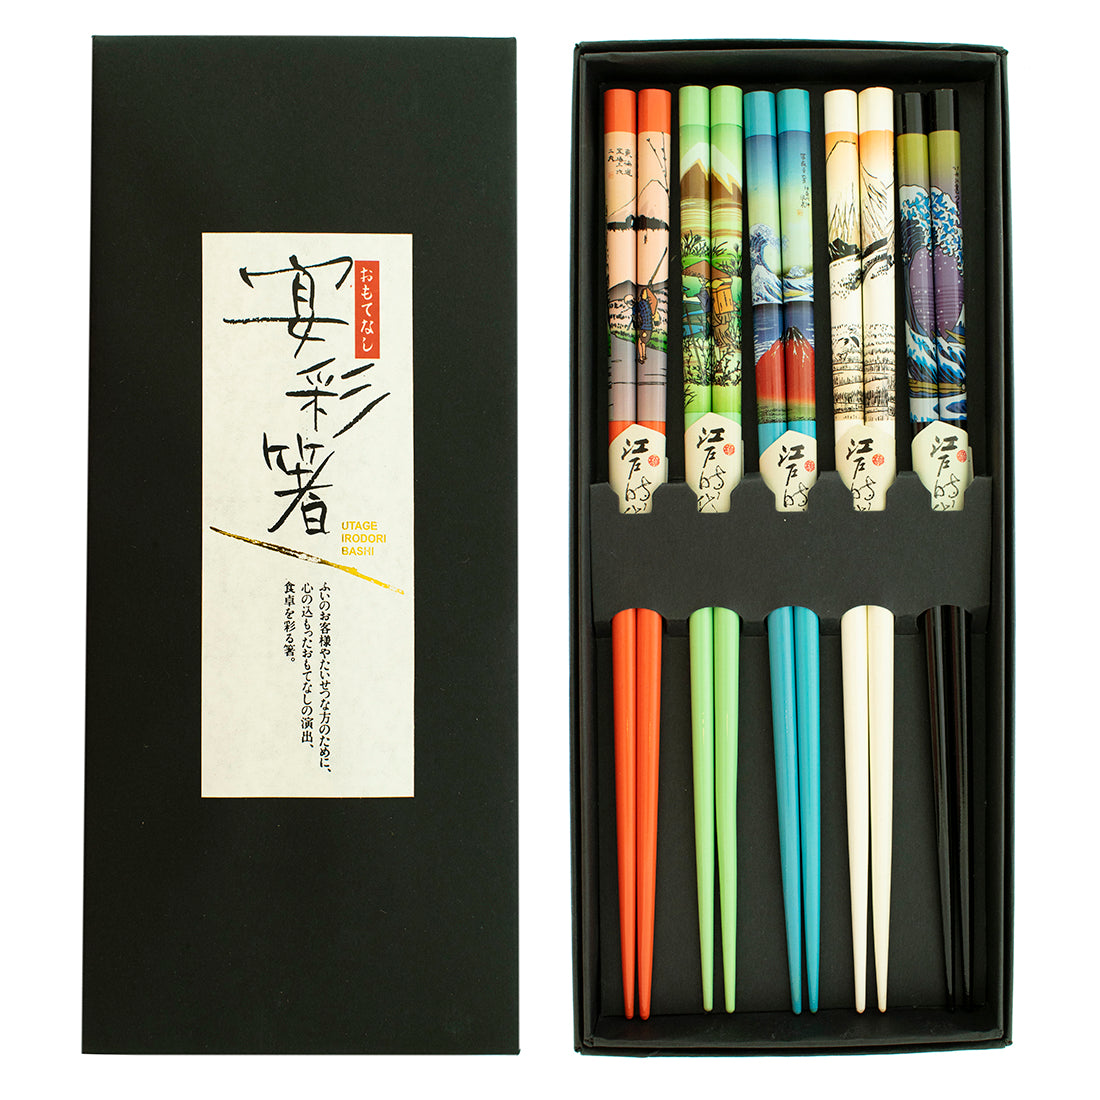 Mount Fuji – Wood Chopsticks - Original Source